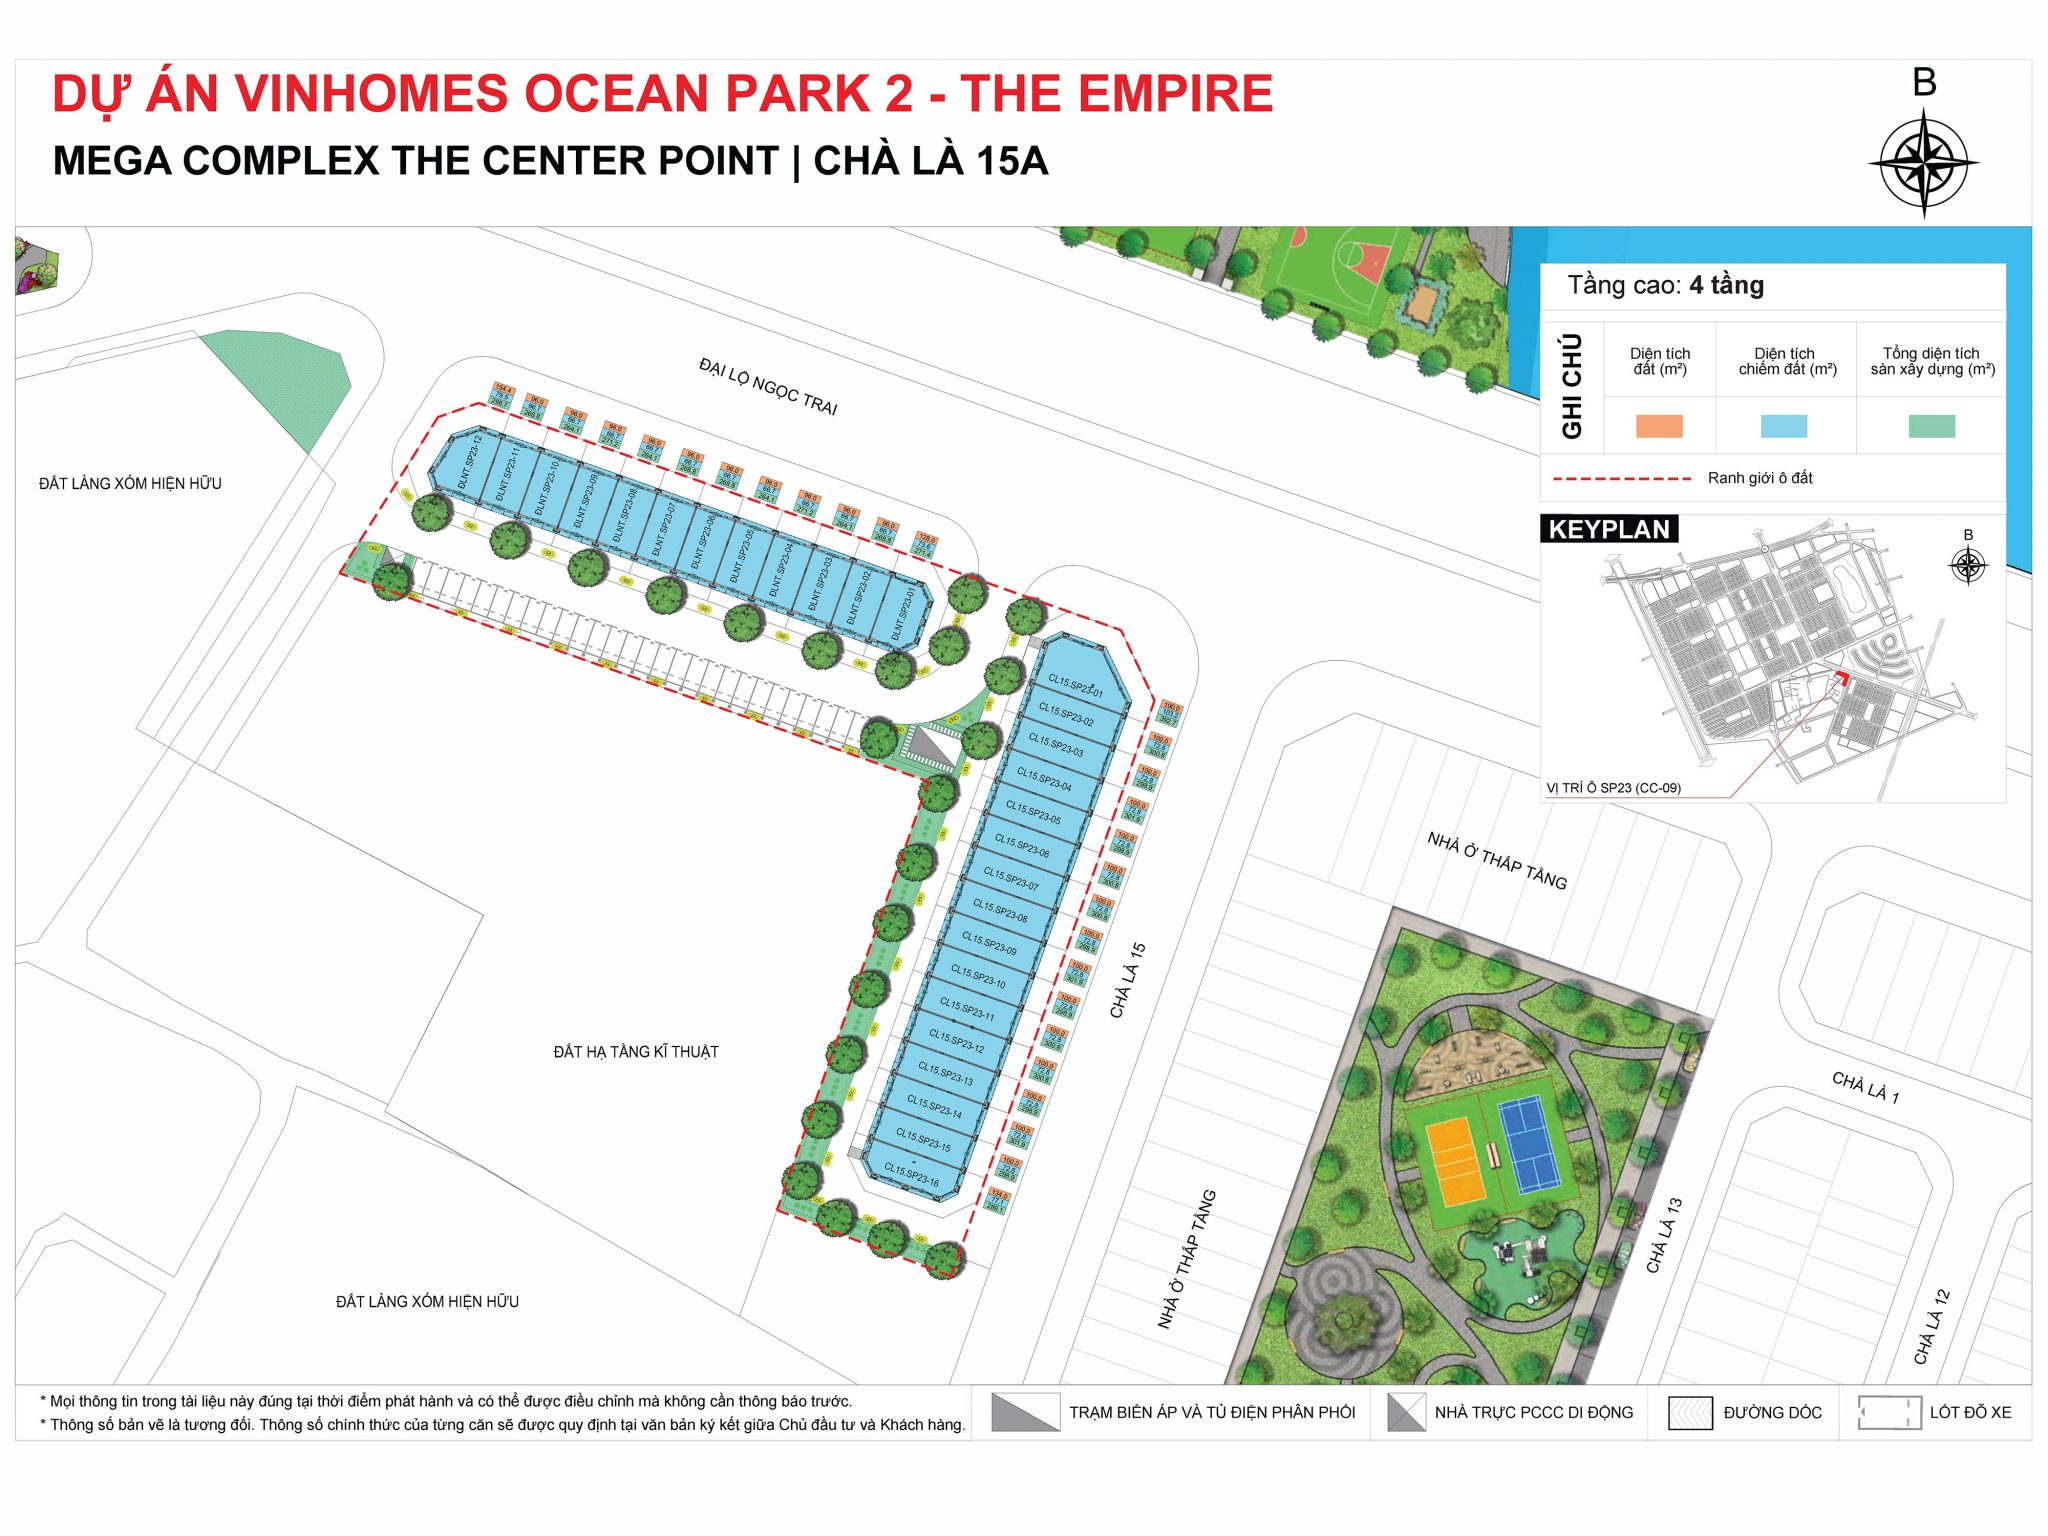 mega-complex-vinhomes-ocean-park-2-phat-trien-nhung-loai-hinh-bat-dong-san-nao-onehousing-2